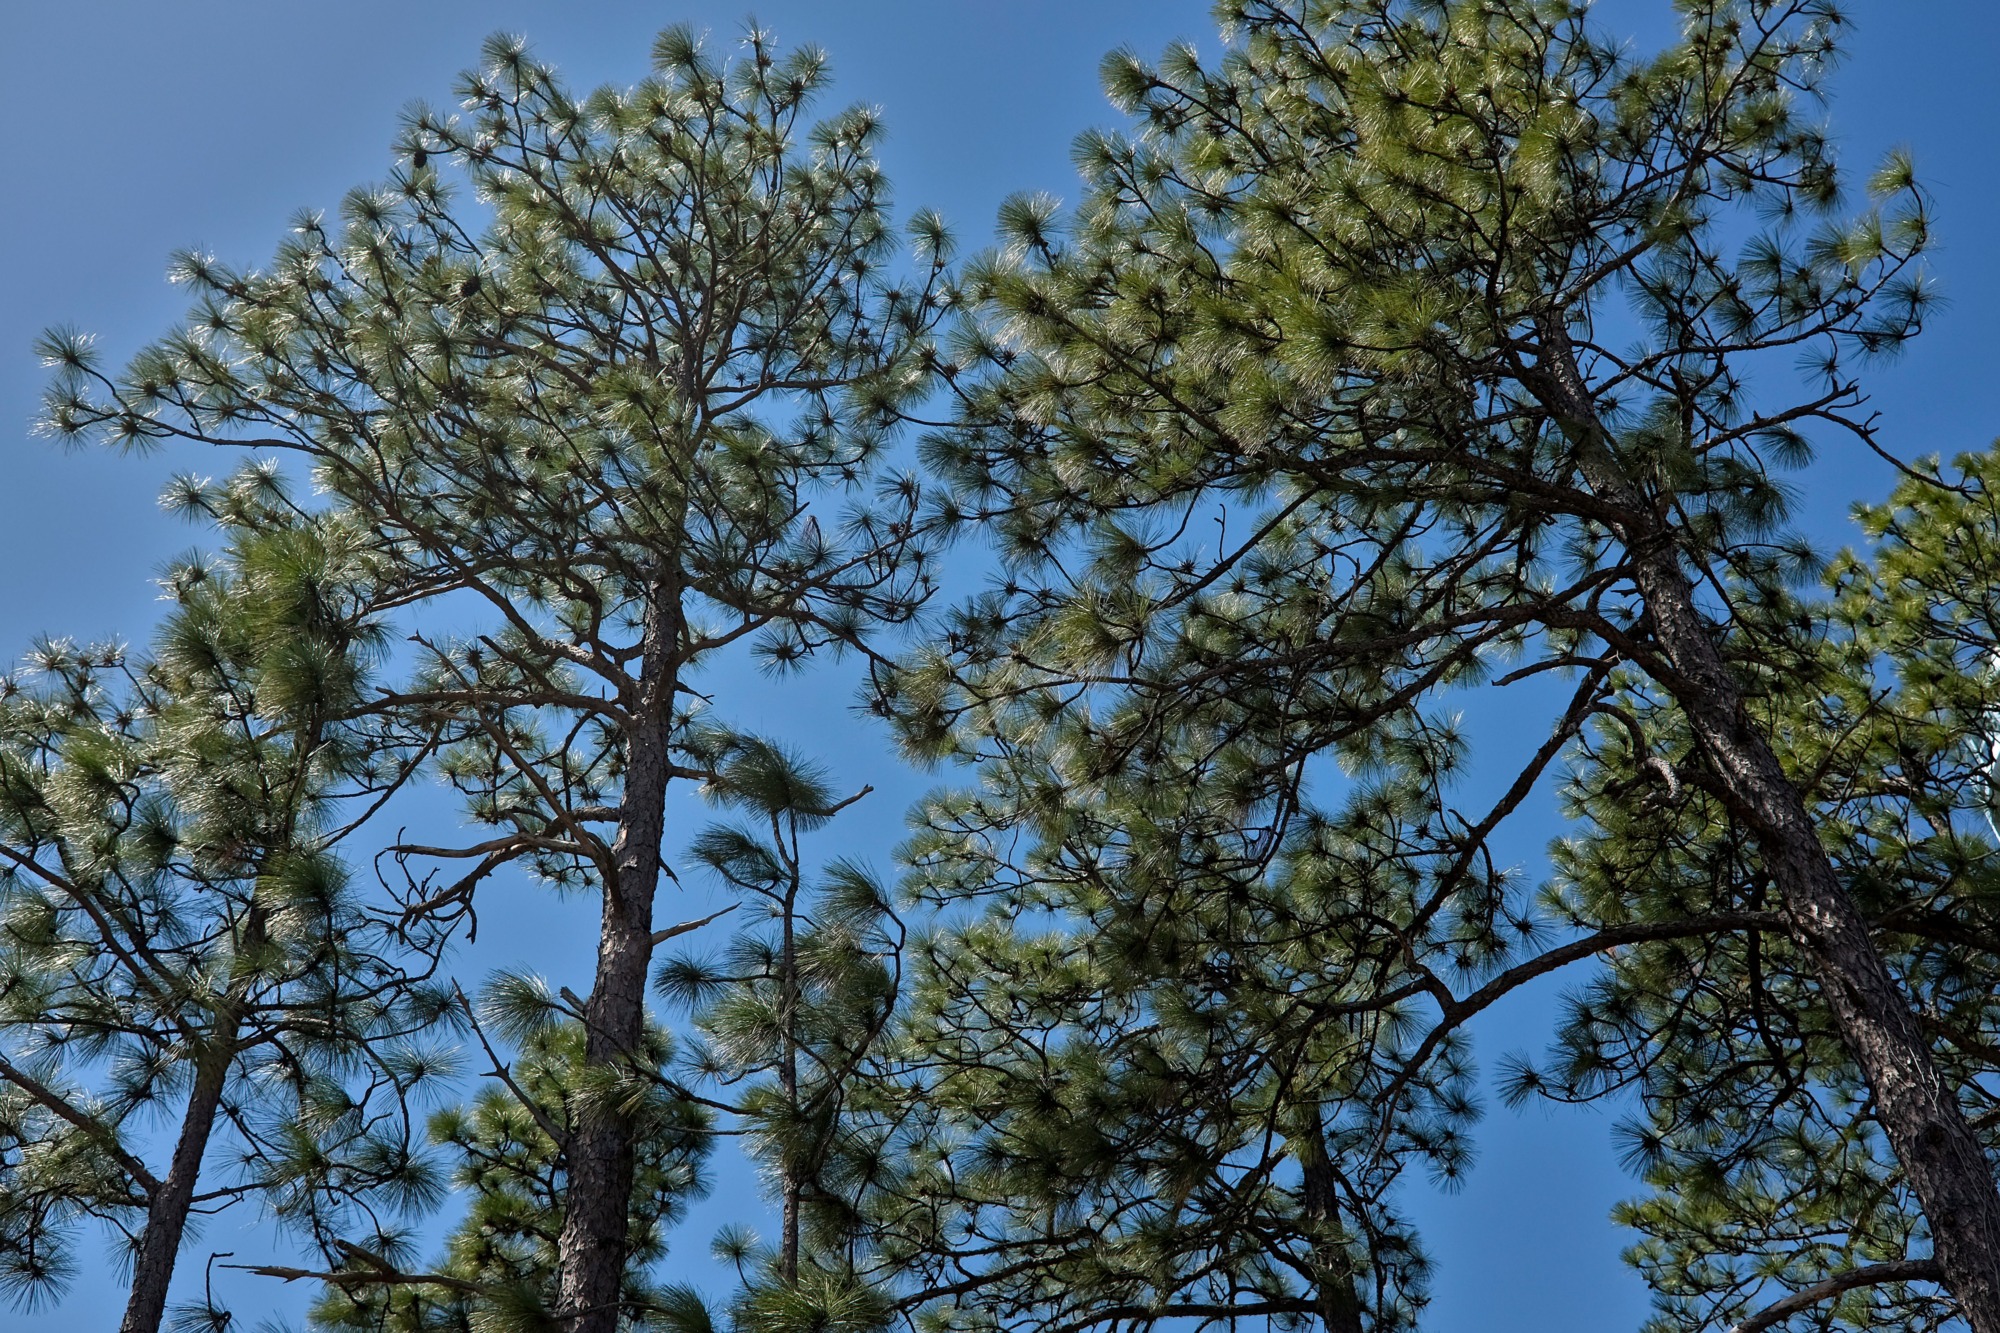 Pine trees against a blue sky